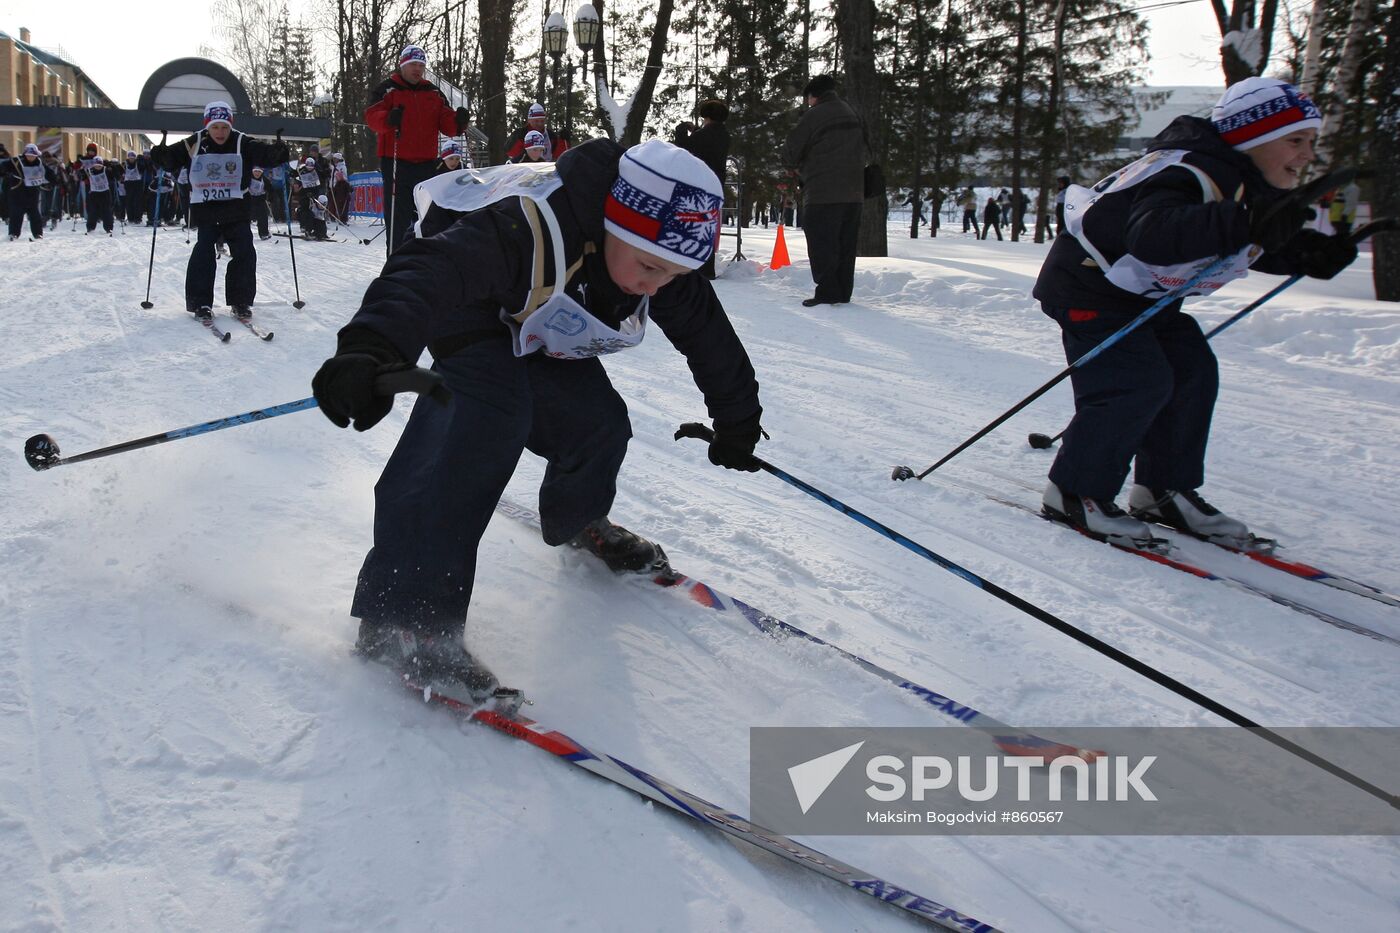 Russian Ski Track 2011 nationwide race in Kazan